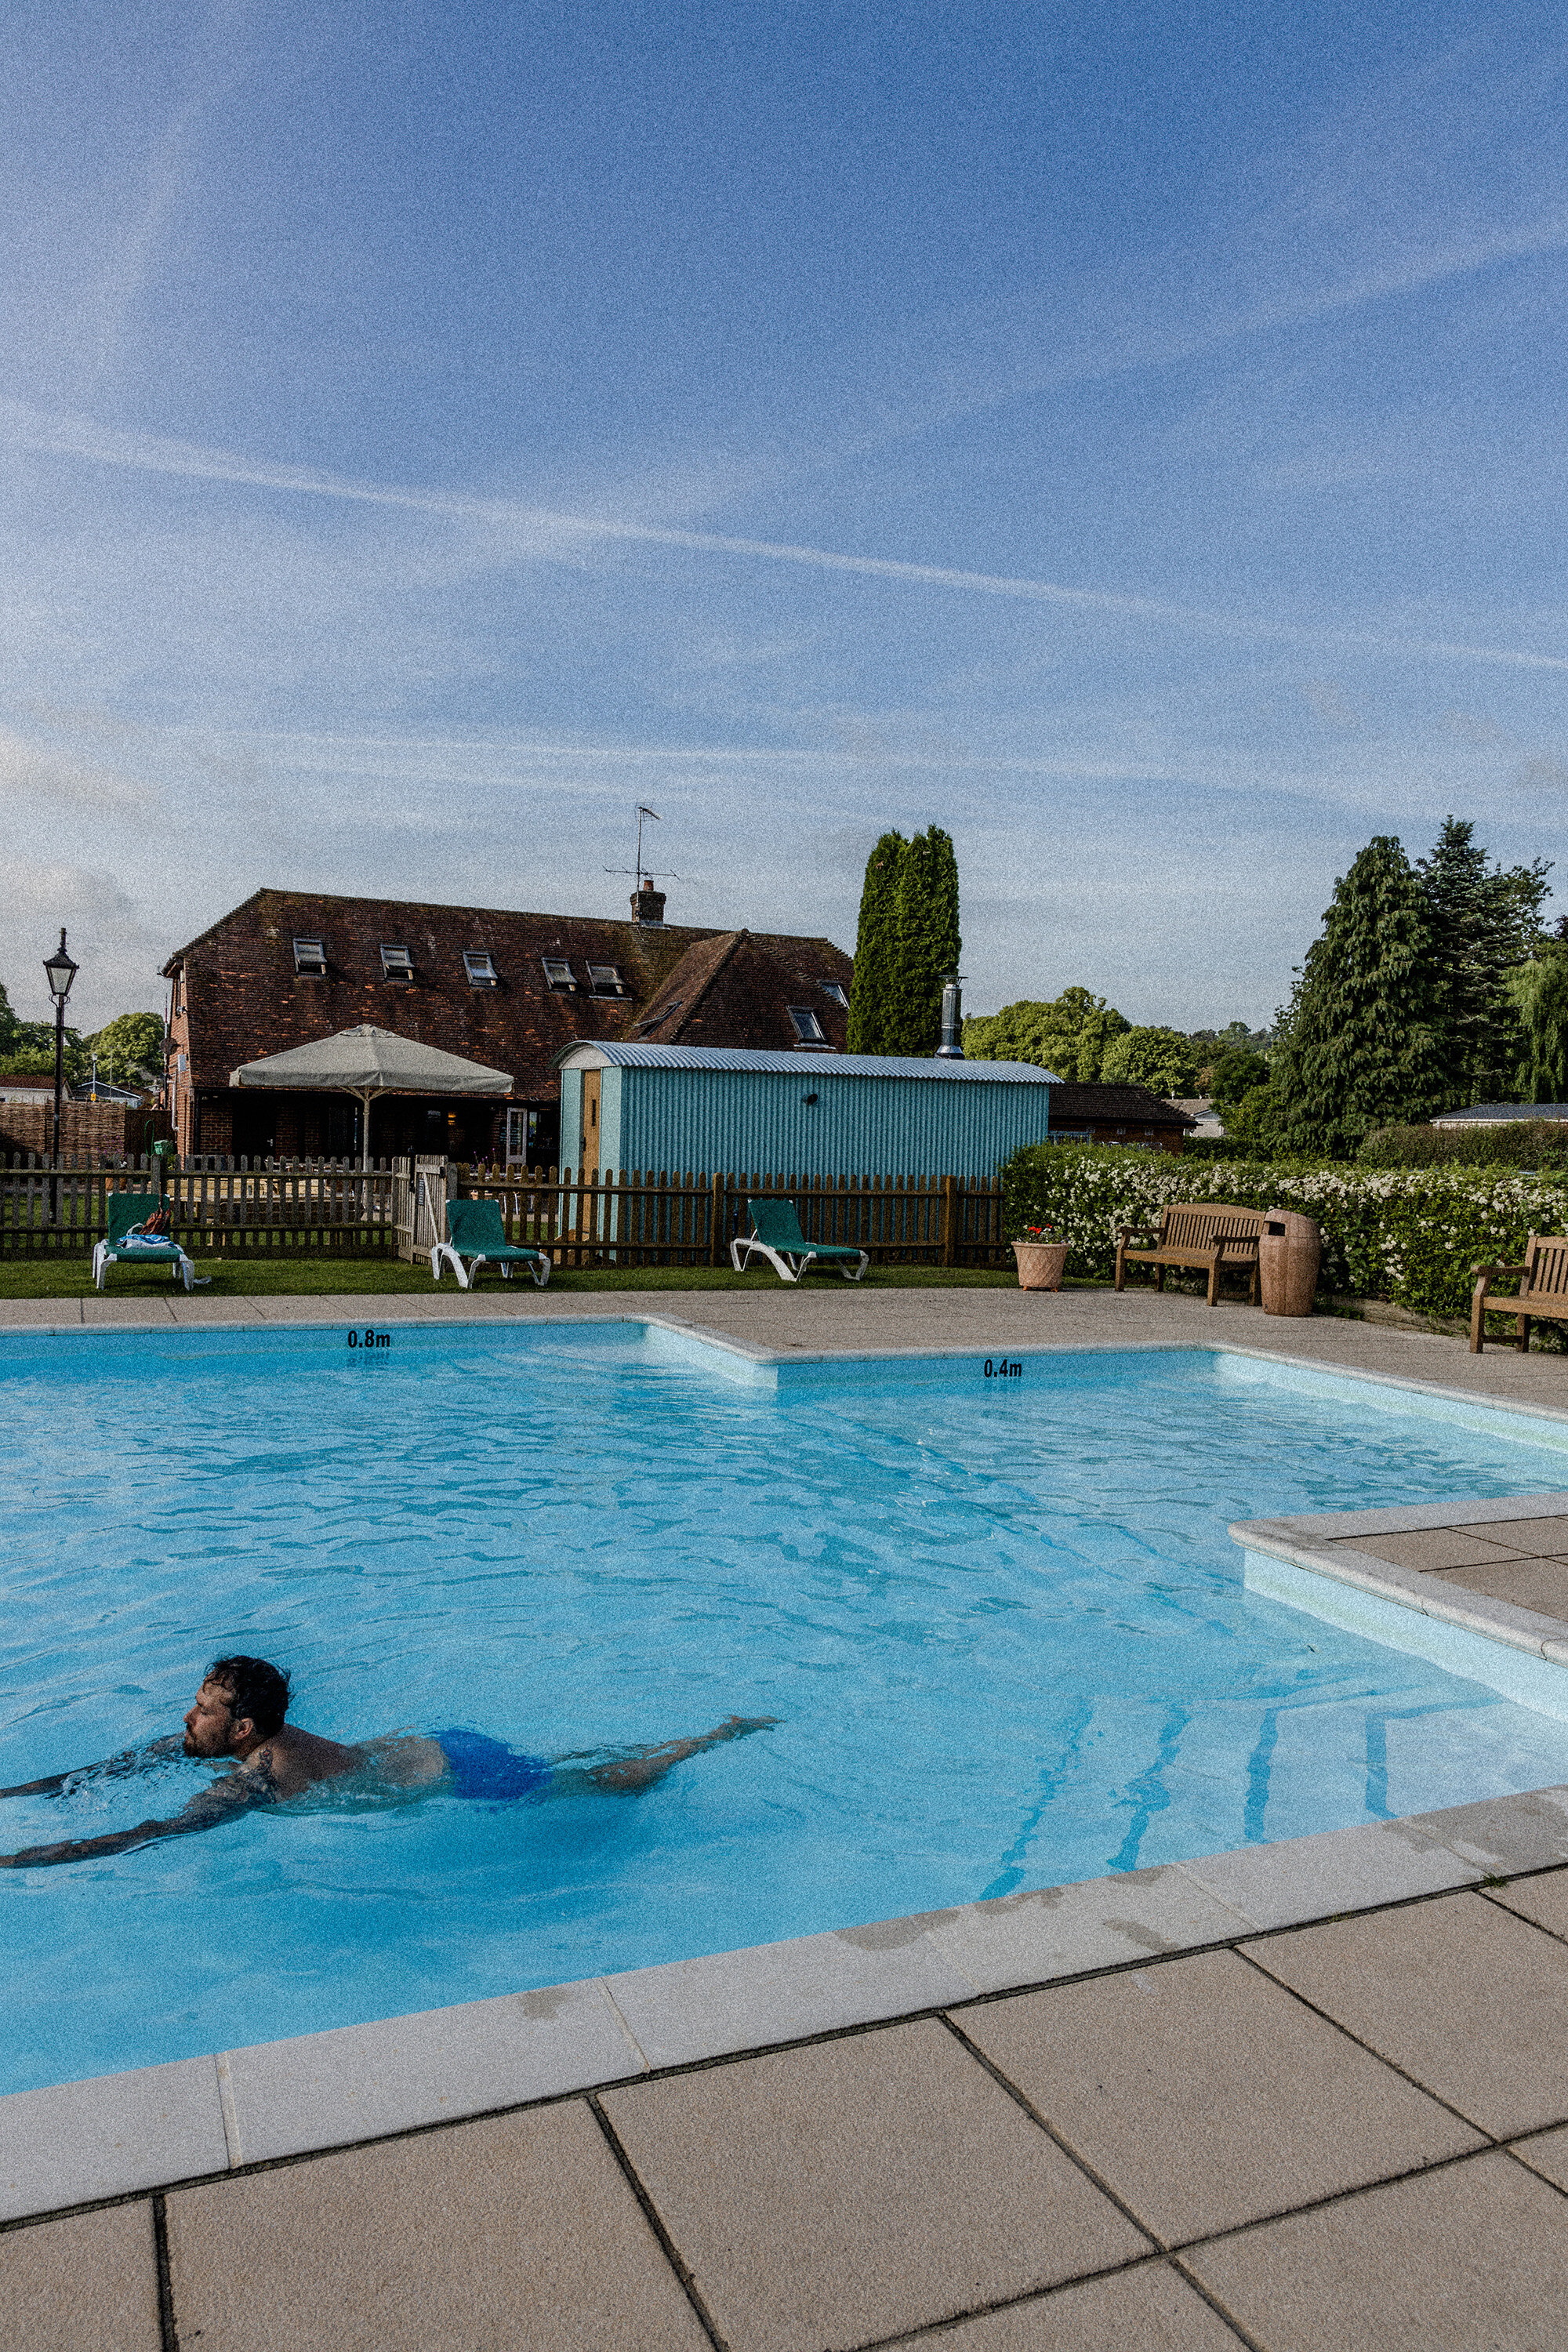 Swimming pool at Swiss Farm campsite